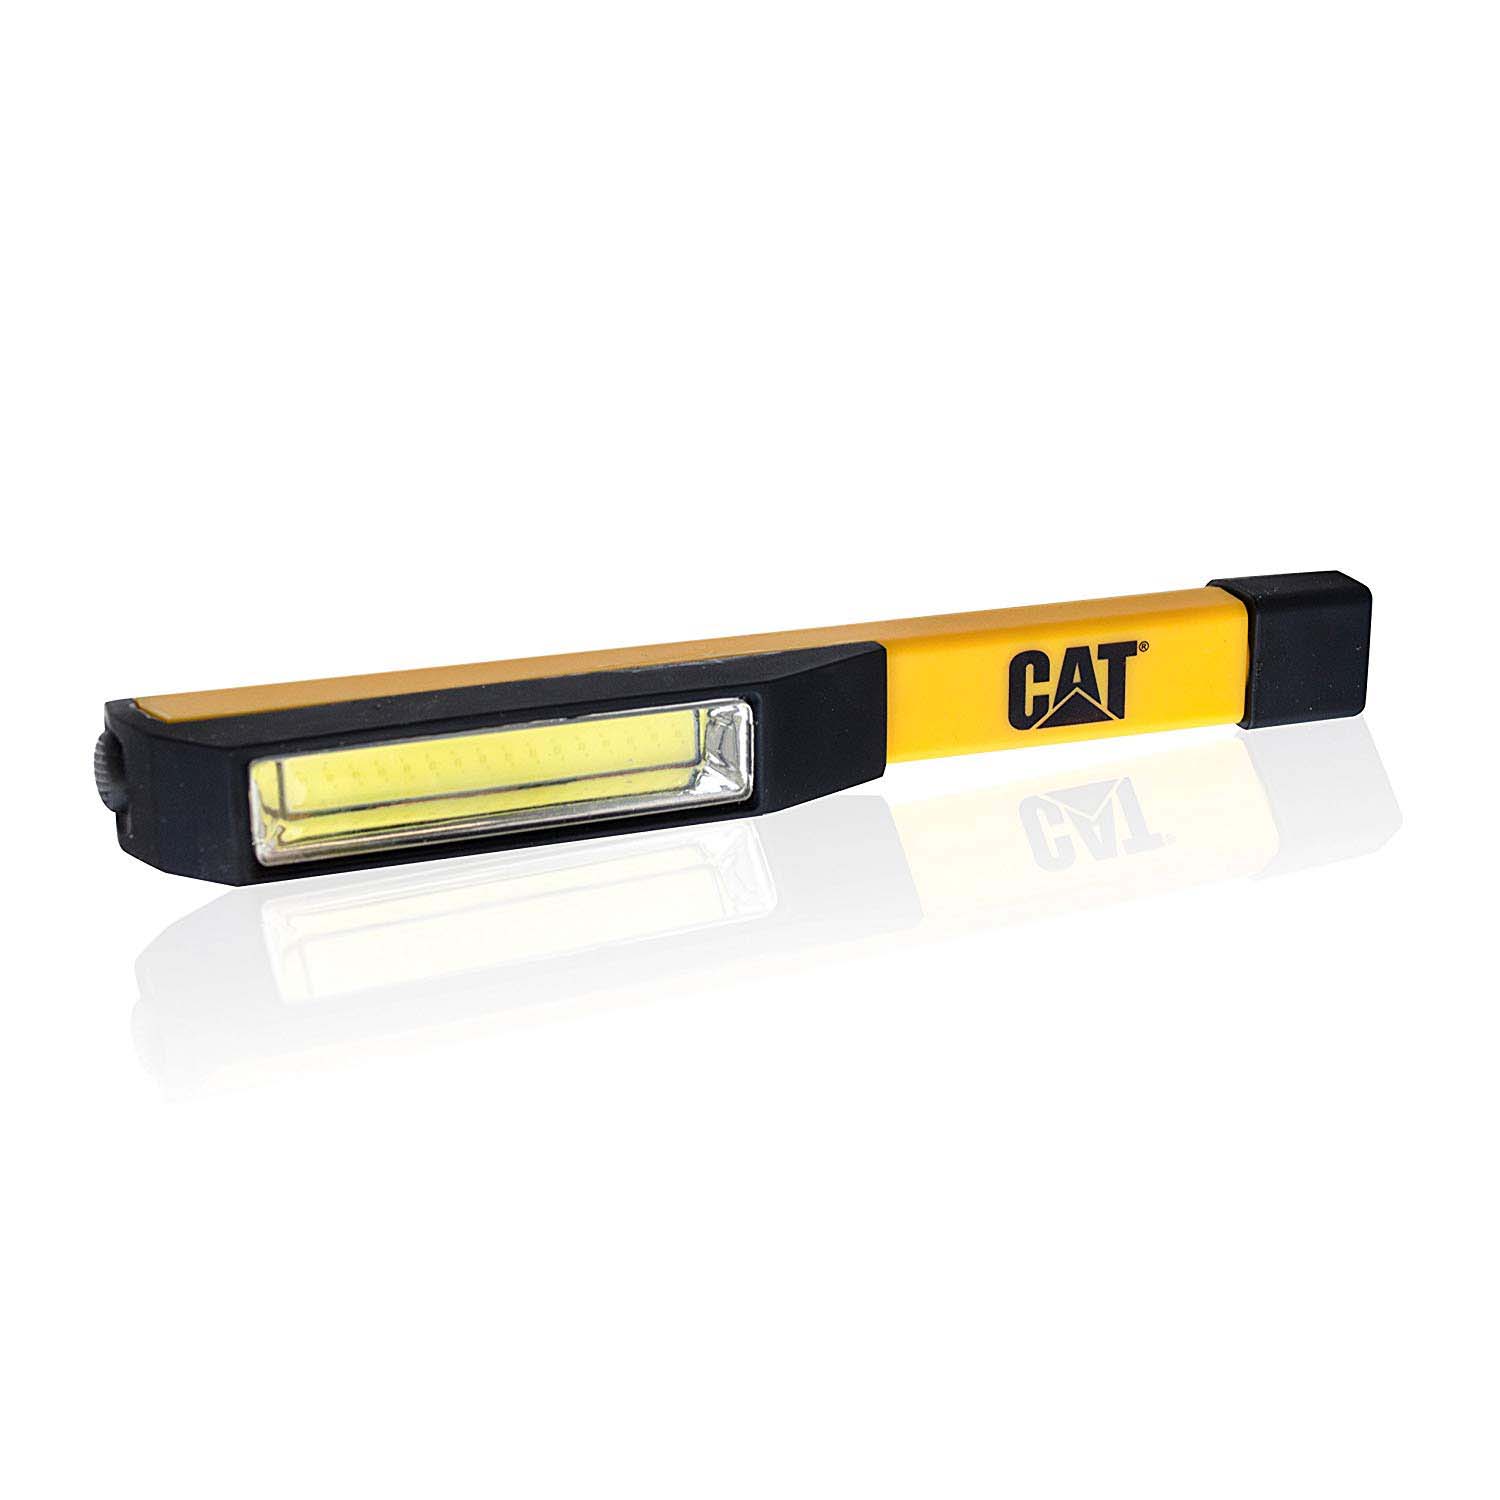 EZRED CT1000 EZ RED CAT 175 Lumen Pocket Cob Light Stick - Yellow